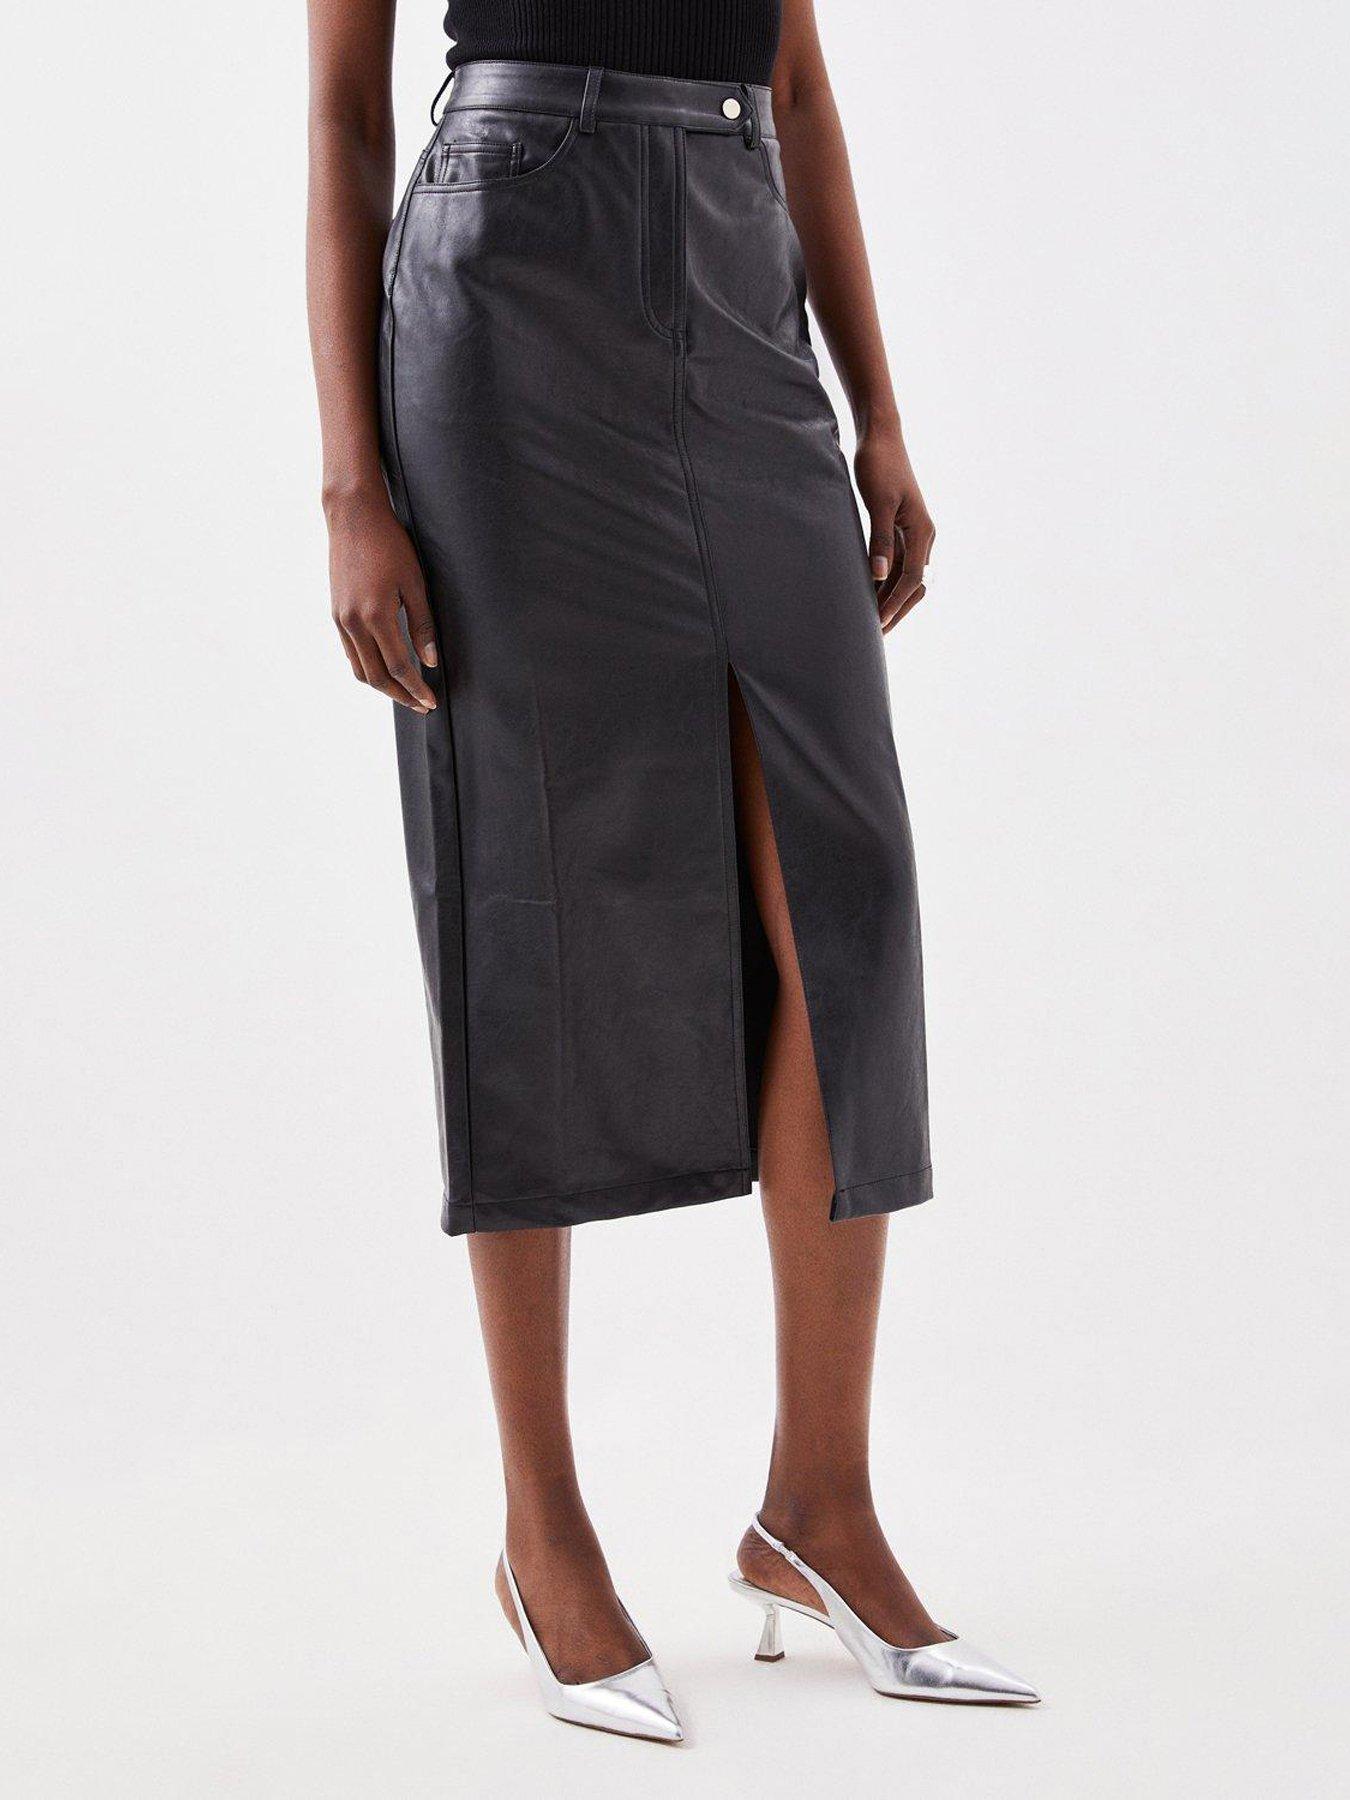 Pour Moi Elise Faux Leather Midi Pencil Skirt